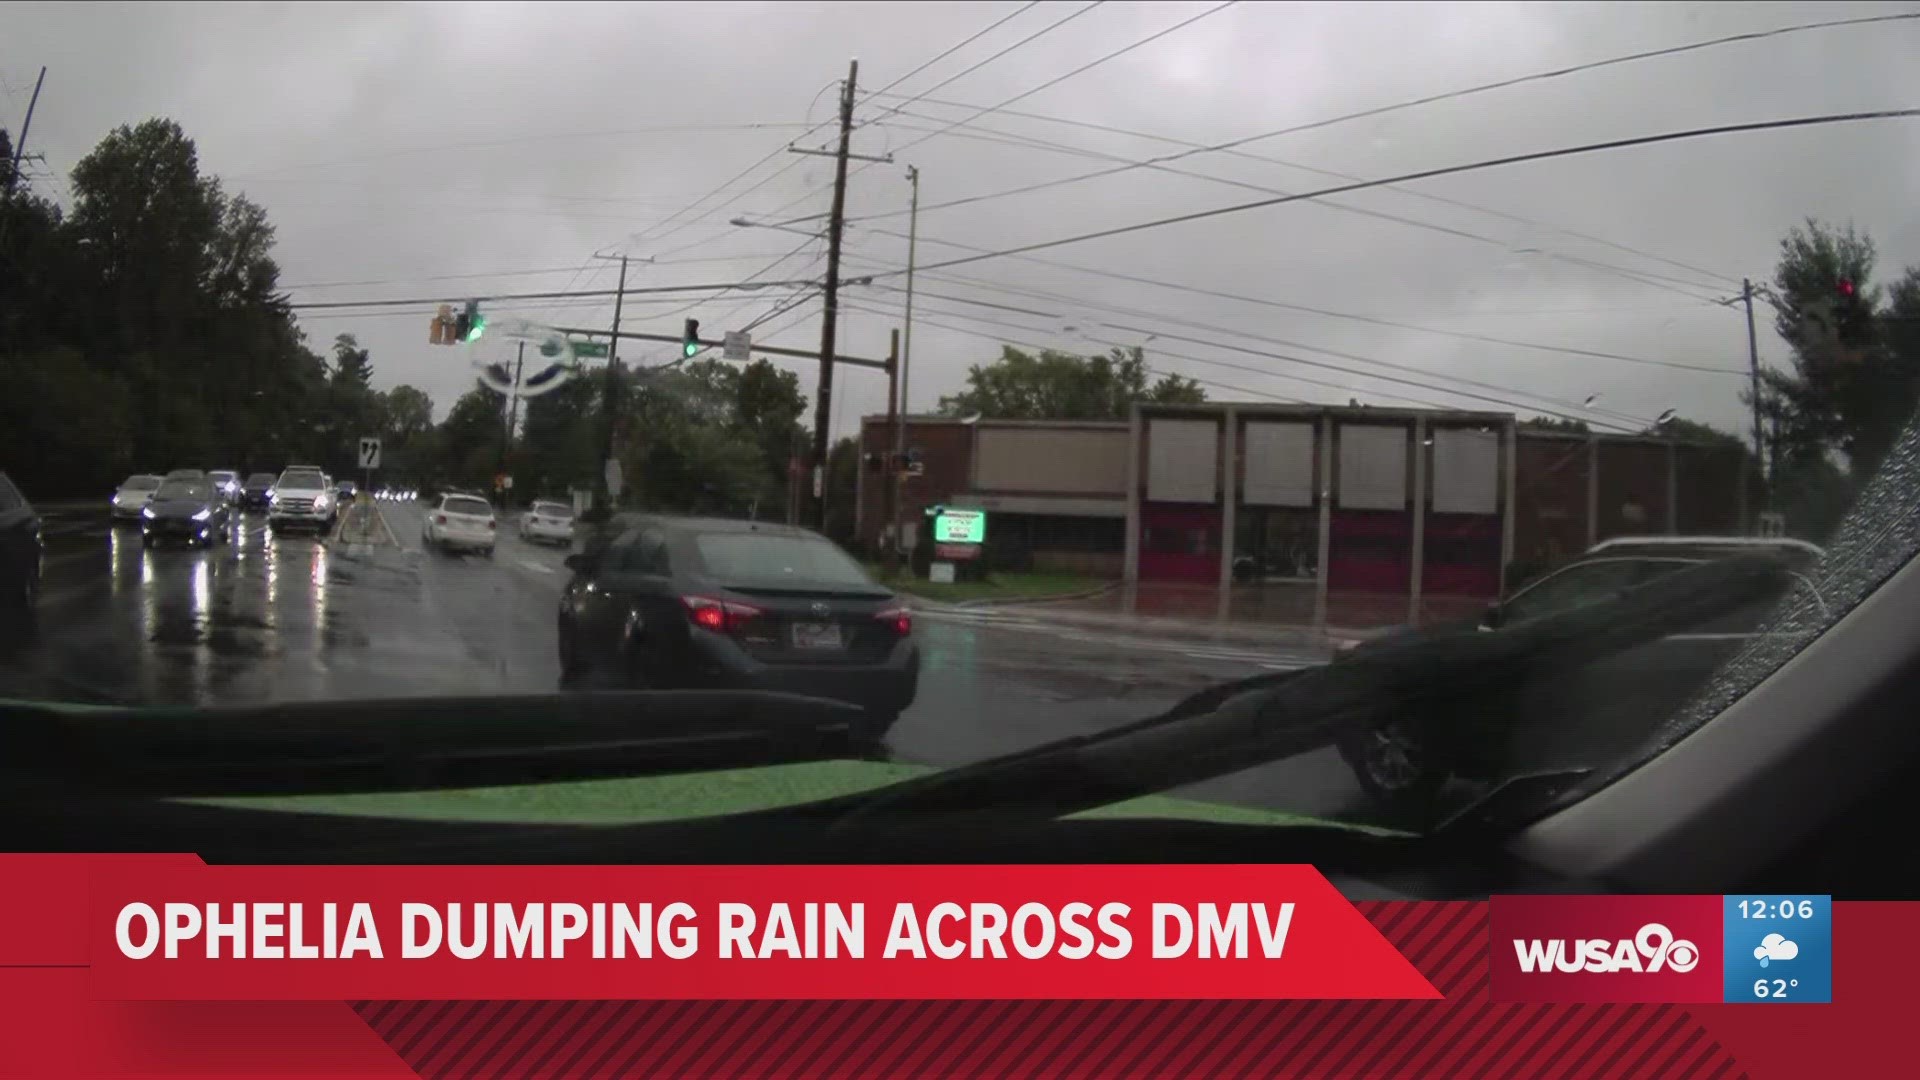 The coastal storm is dumping rain across the DMV.